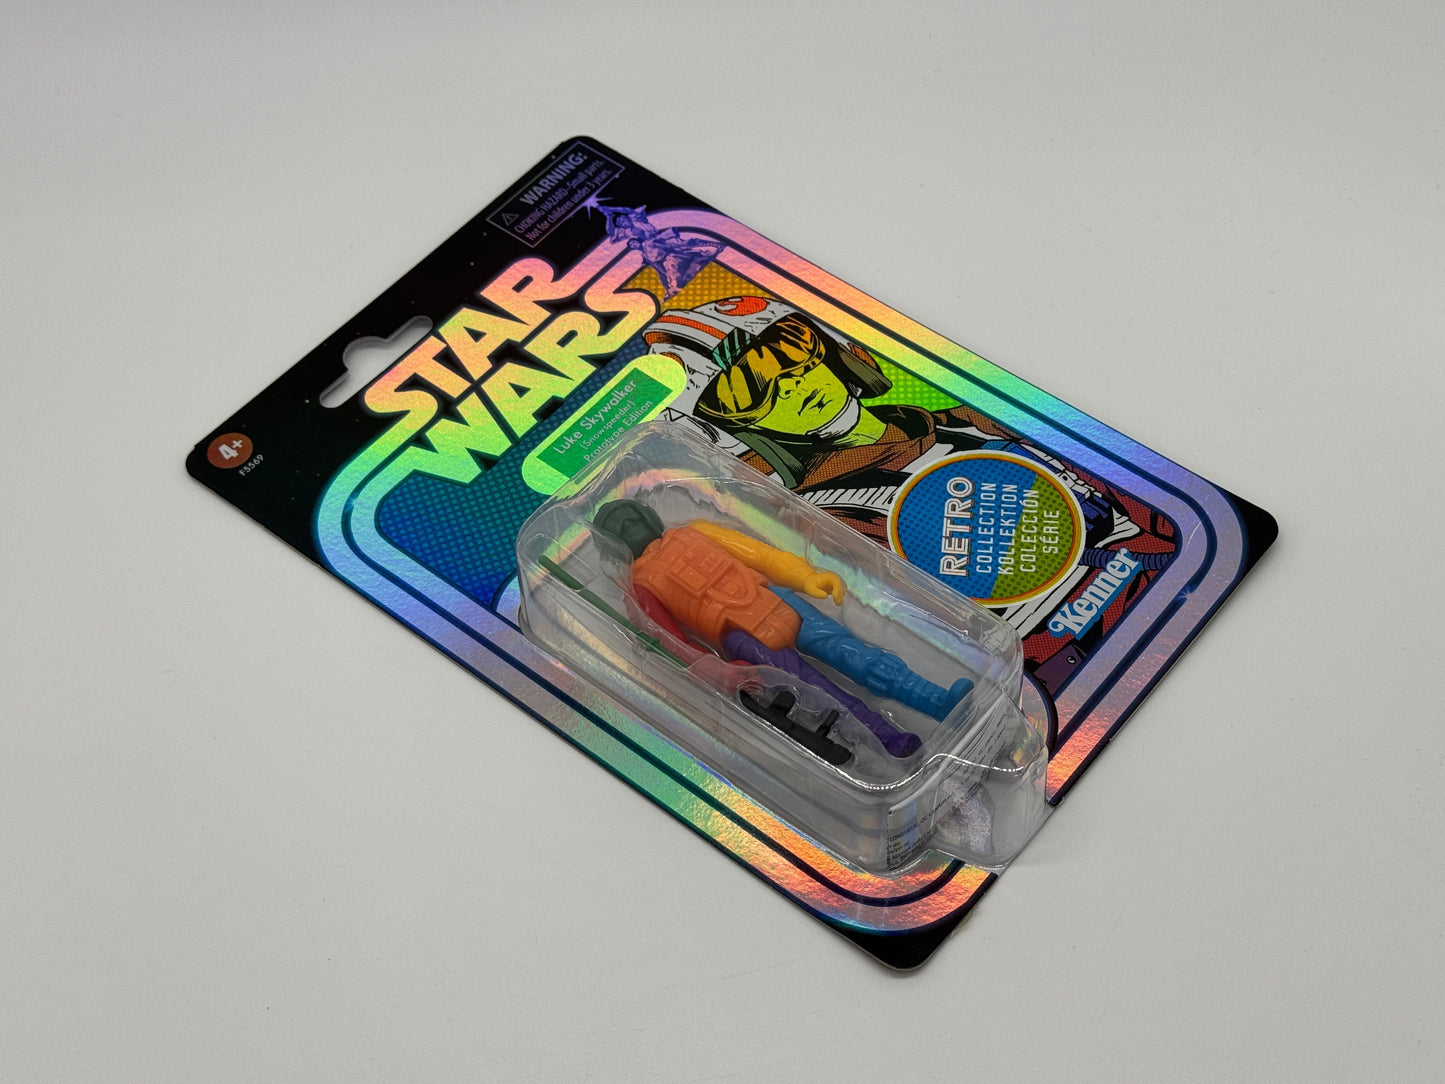 Star Wars Retro Collection "Luke Skywalker Snowspeeder" Prototype Edition Hasbro (#4)